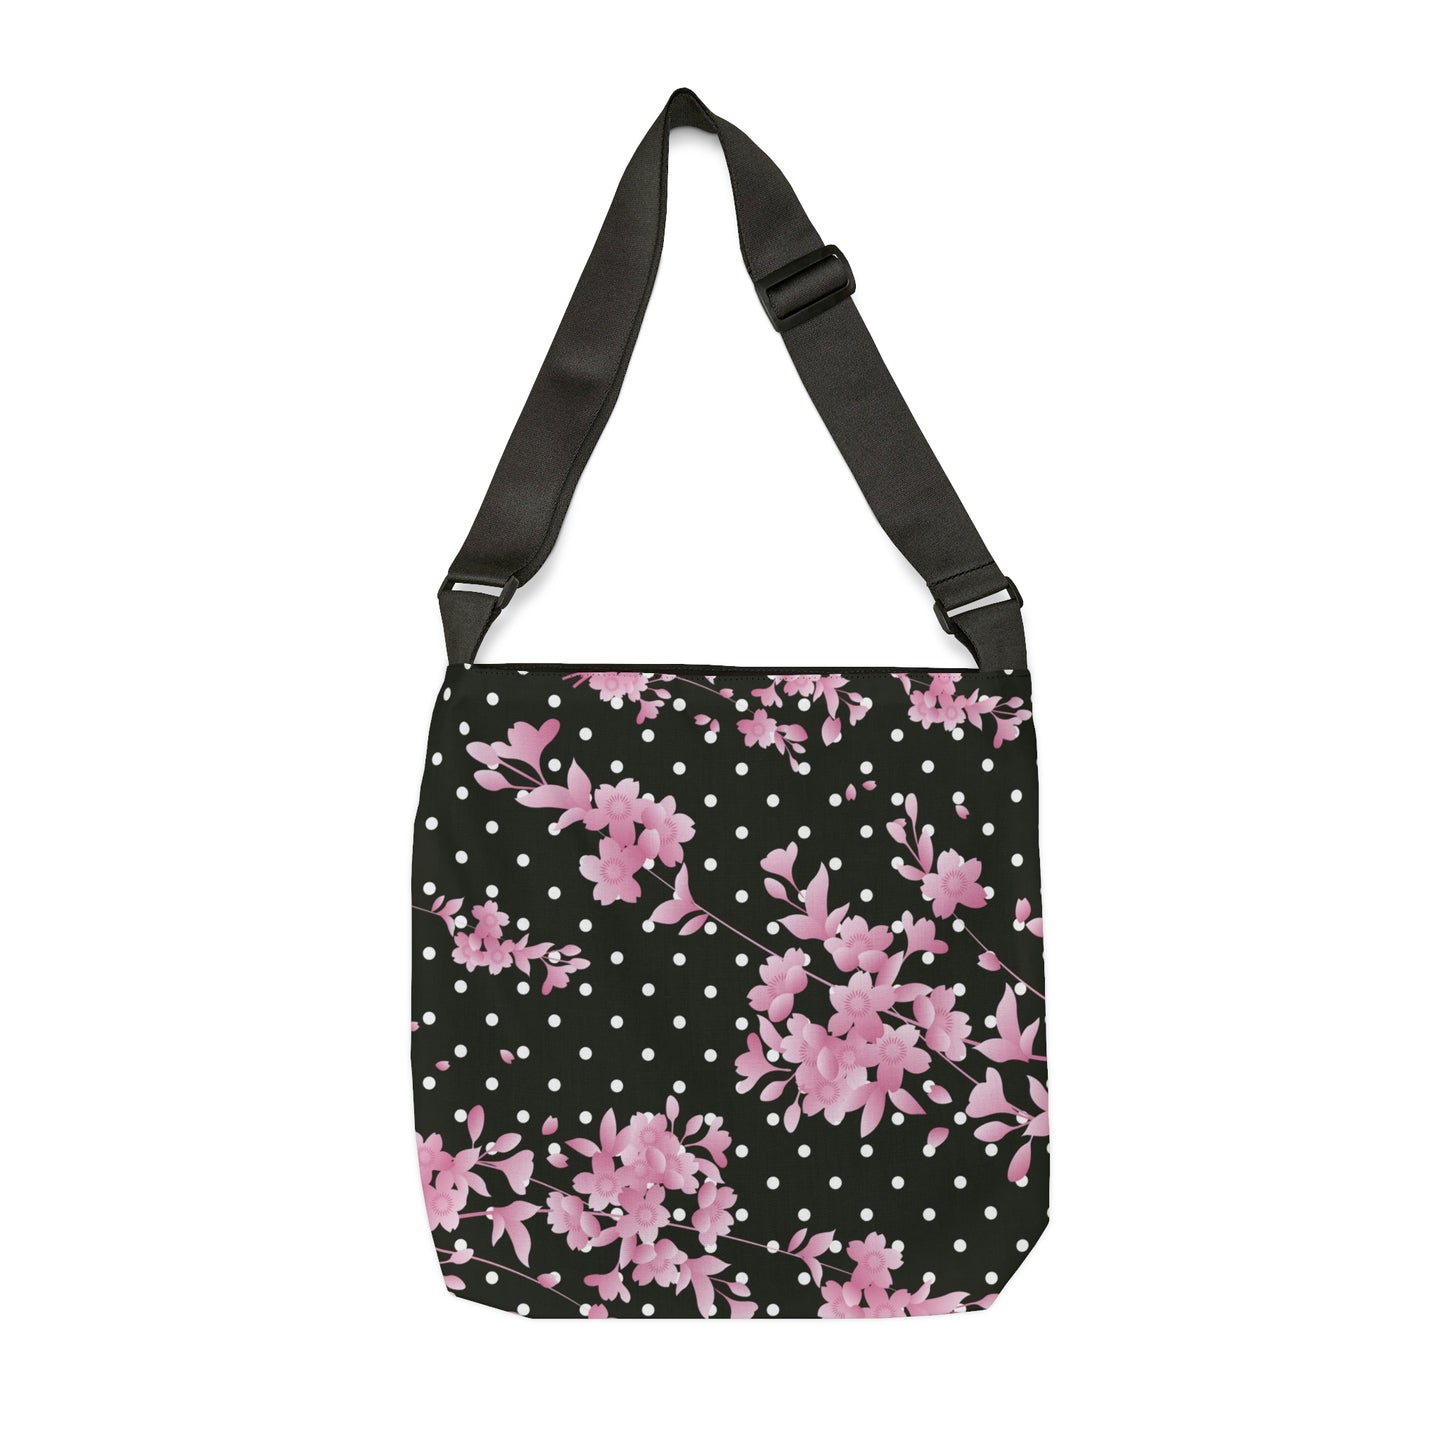 Women's Crossbody Tote / Pink Polkadot Floral Tote Bag